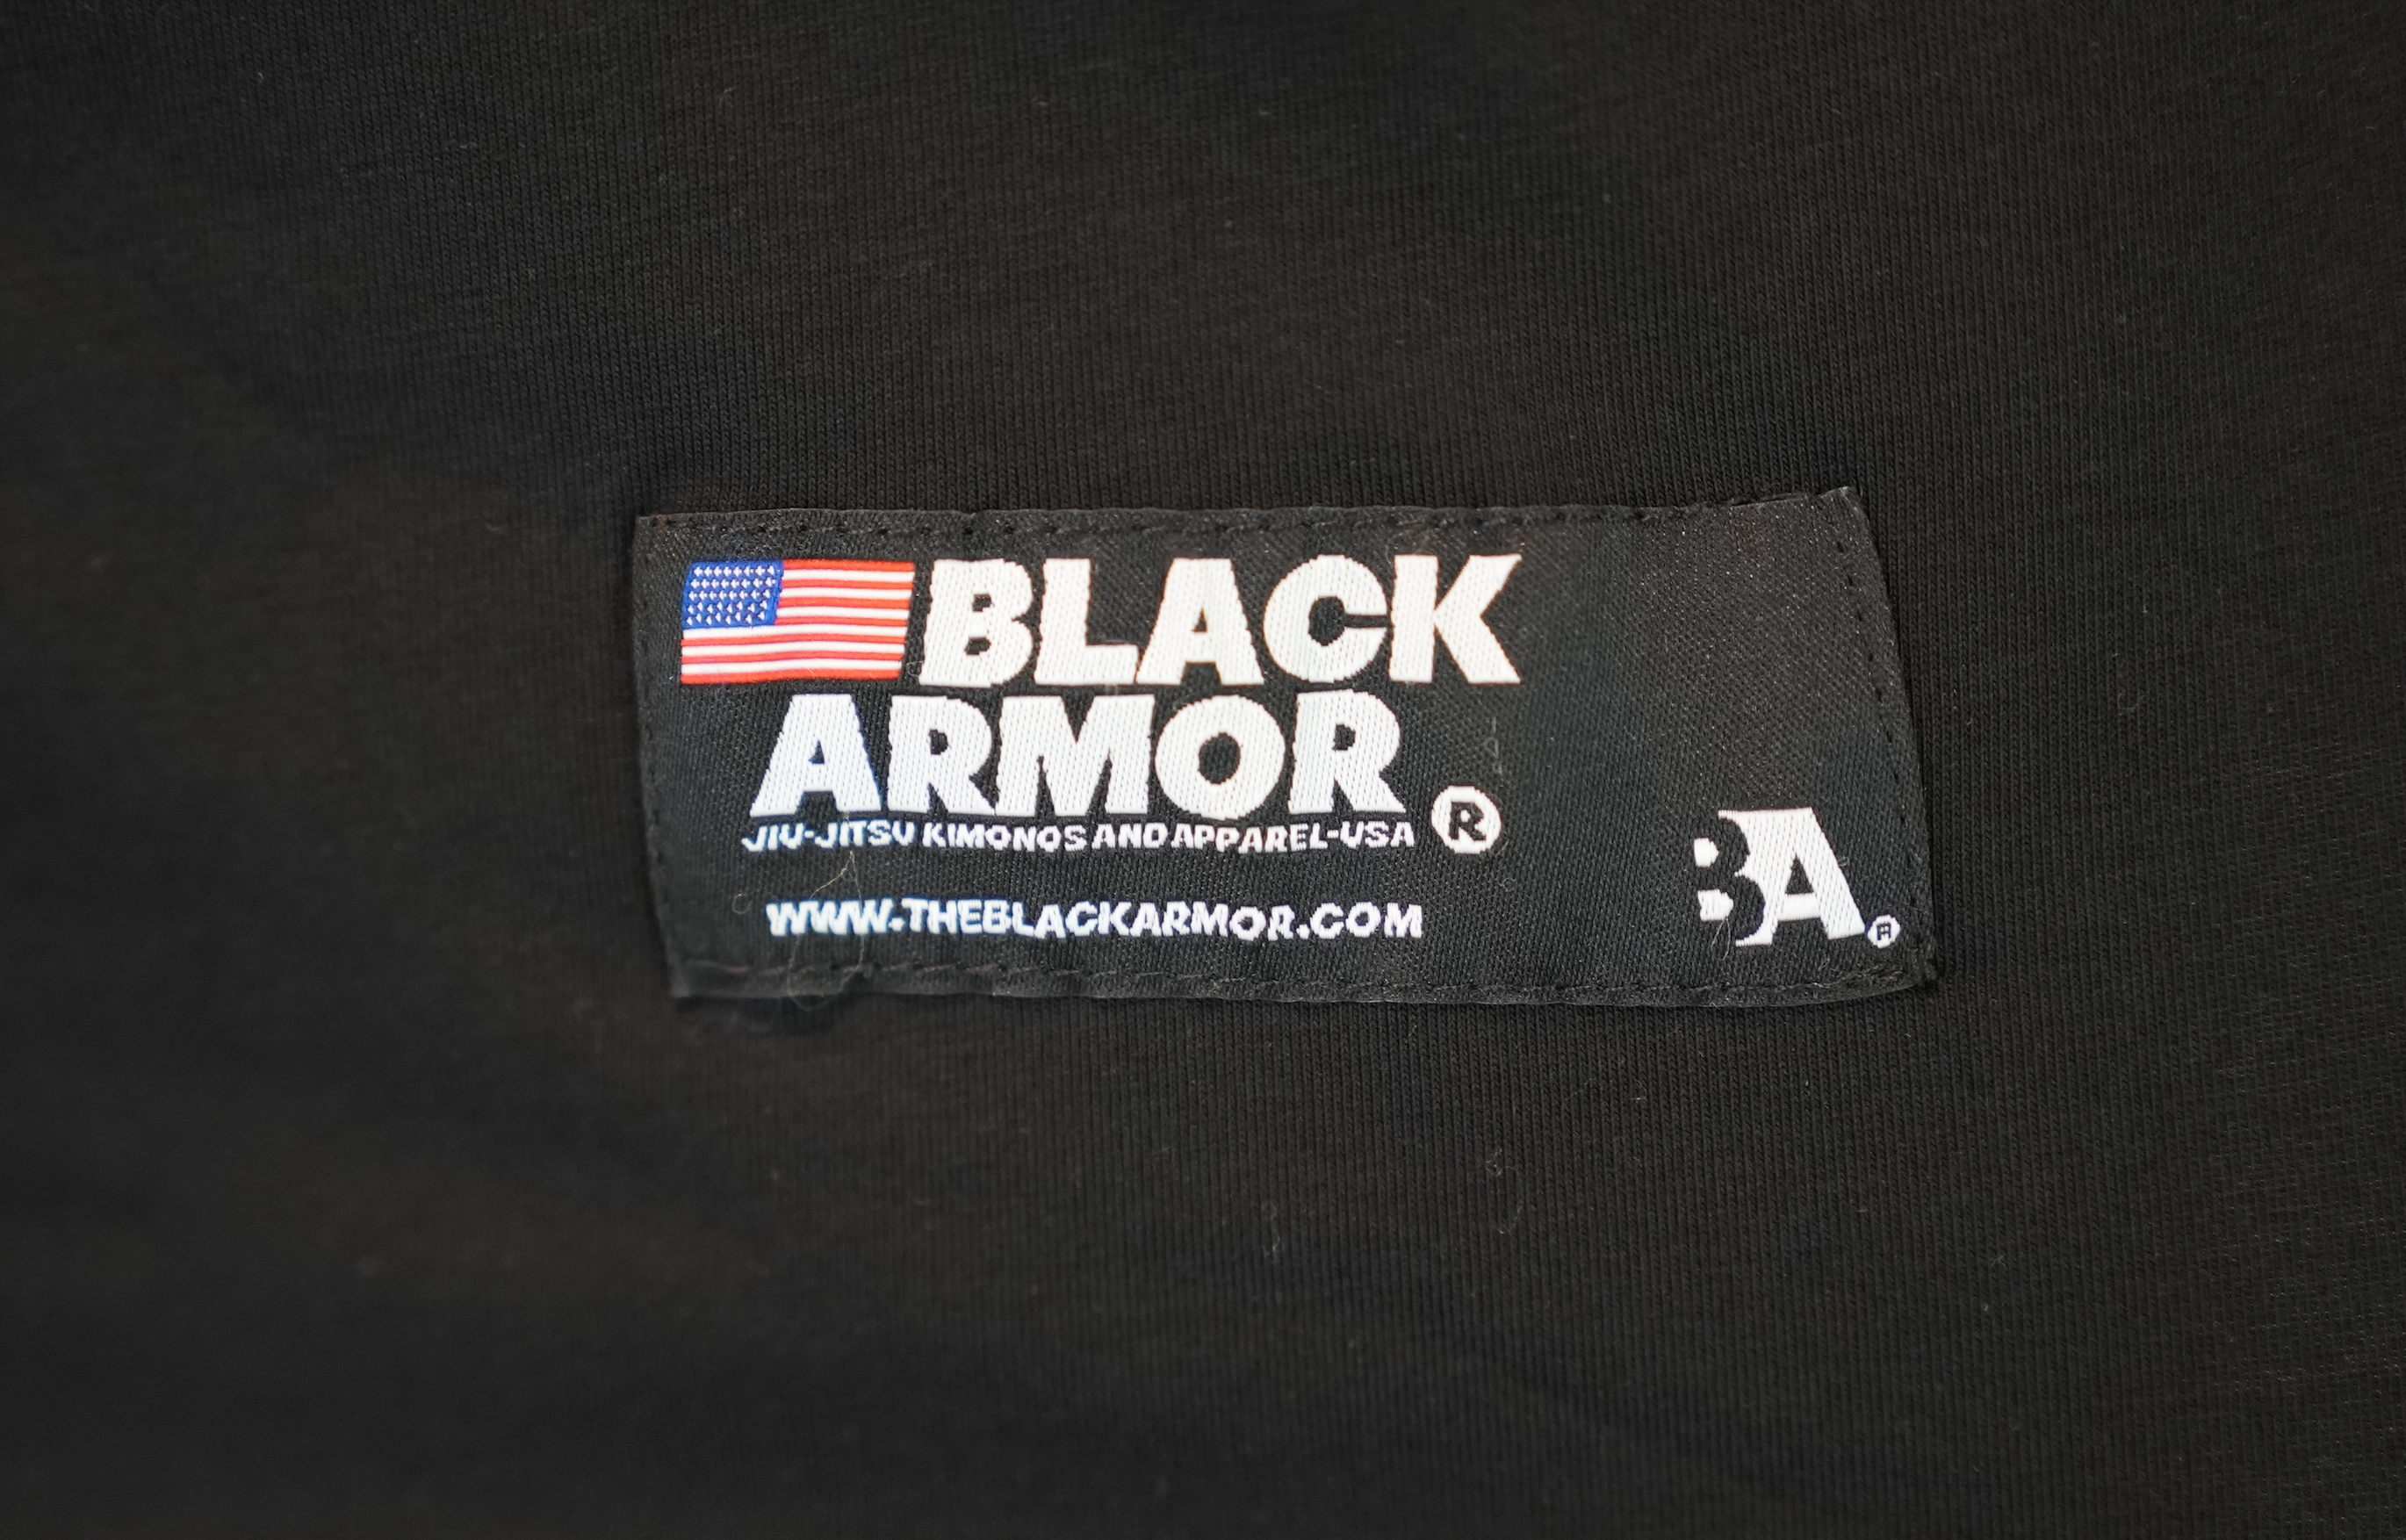 Black Armor / Jiu-jitsu 2.0